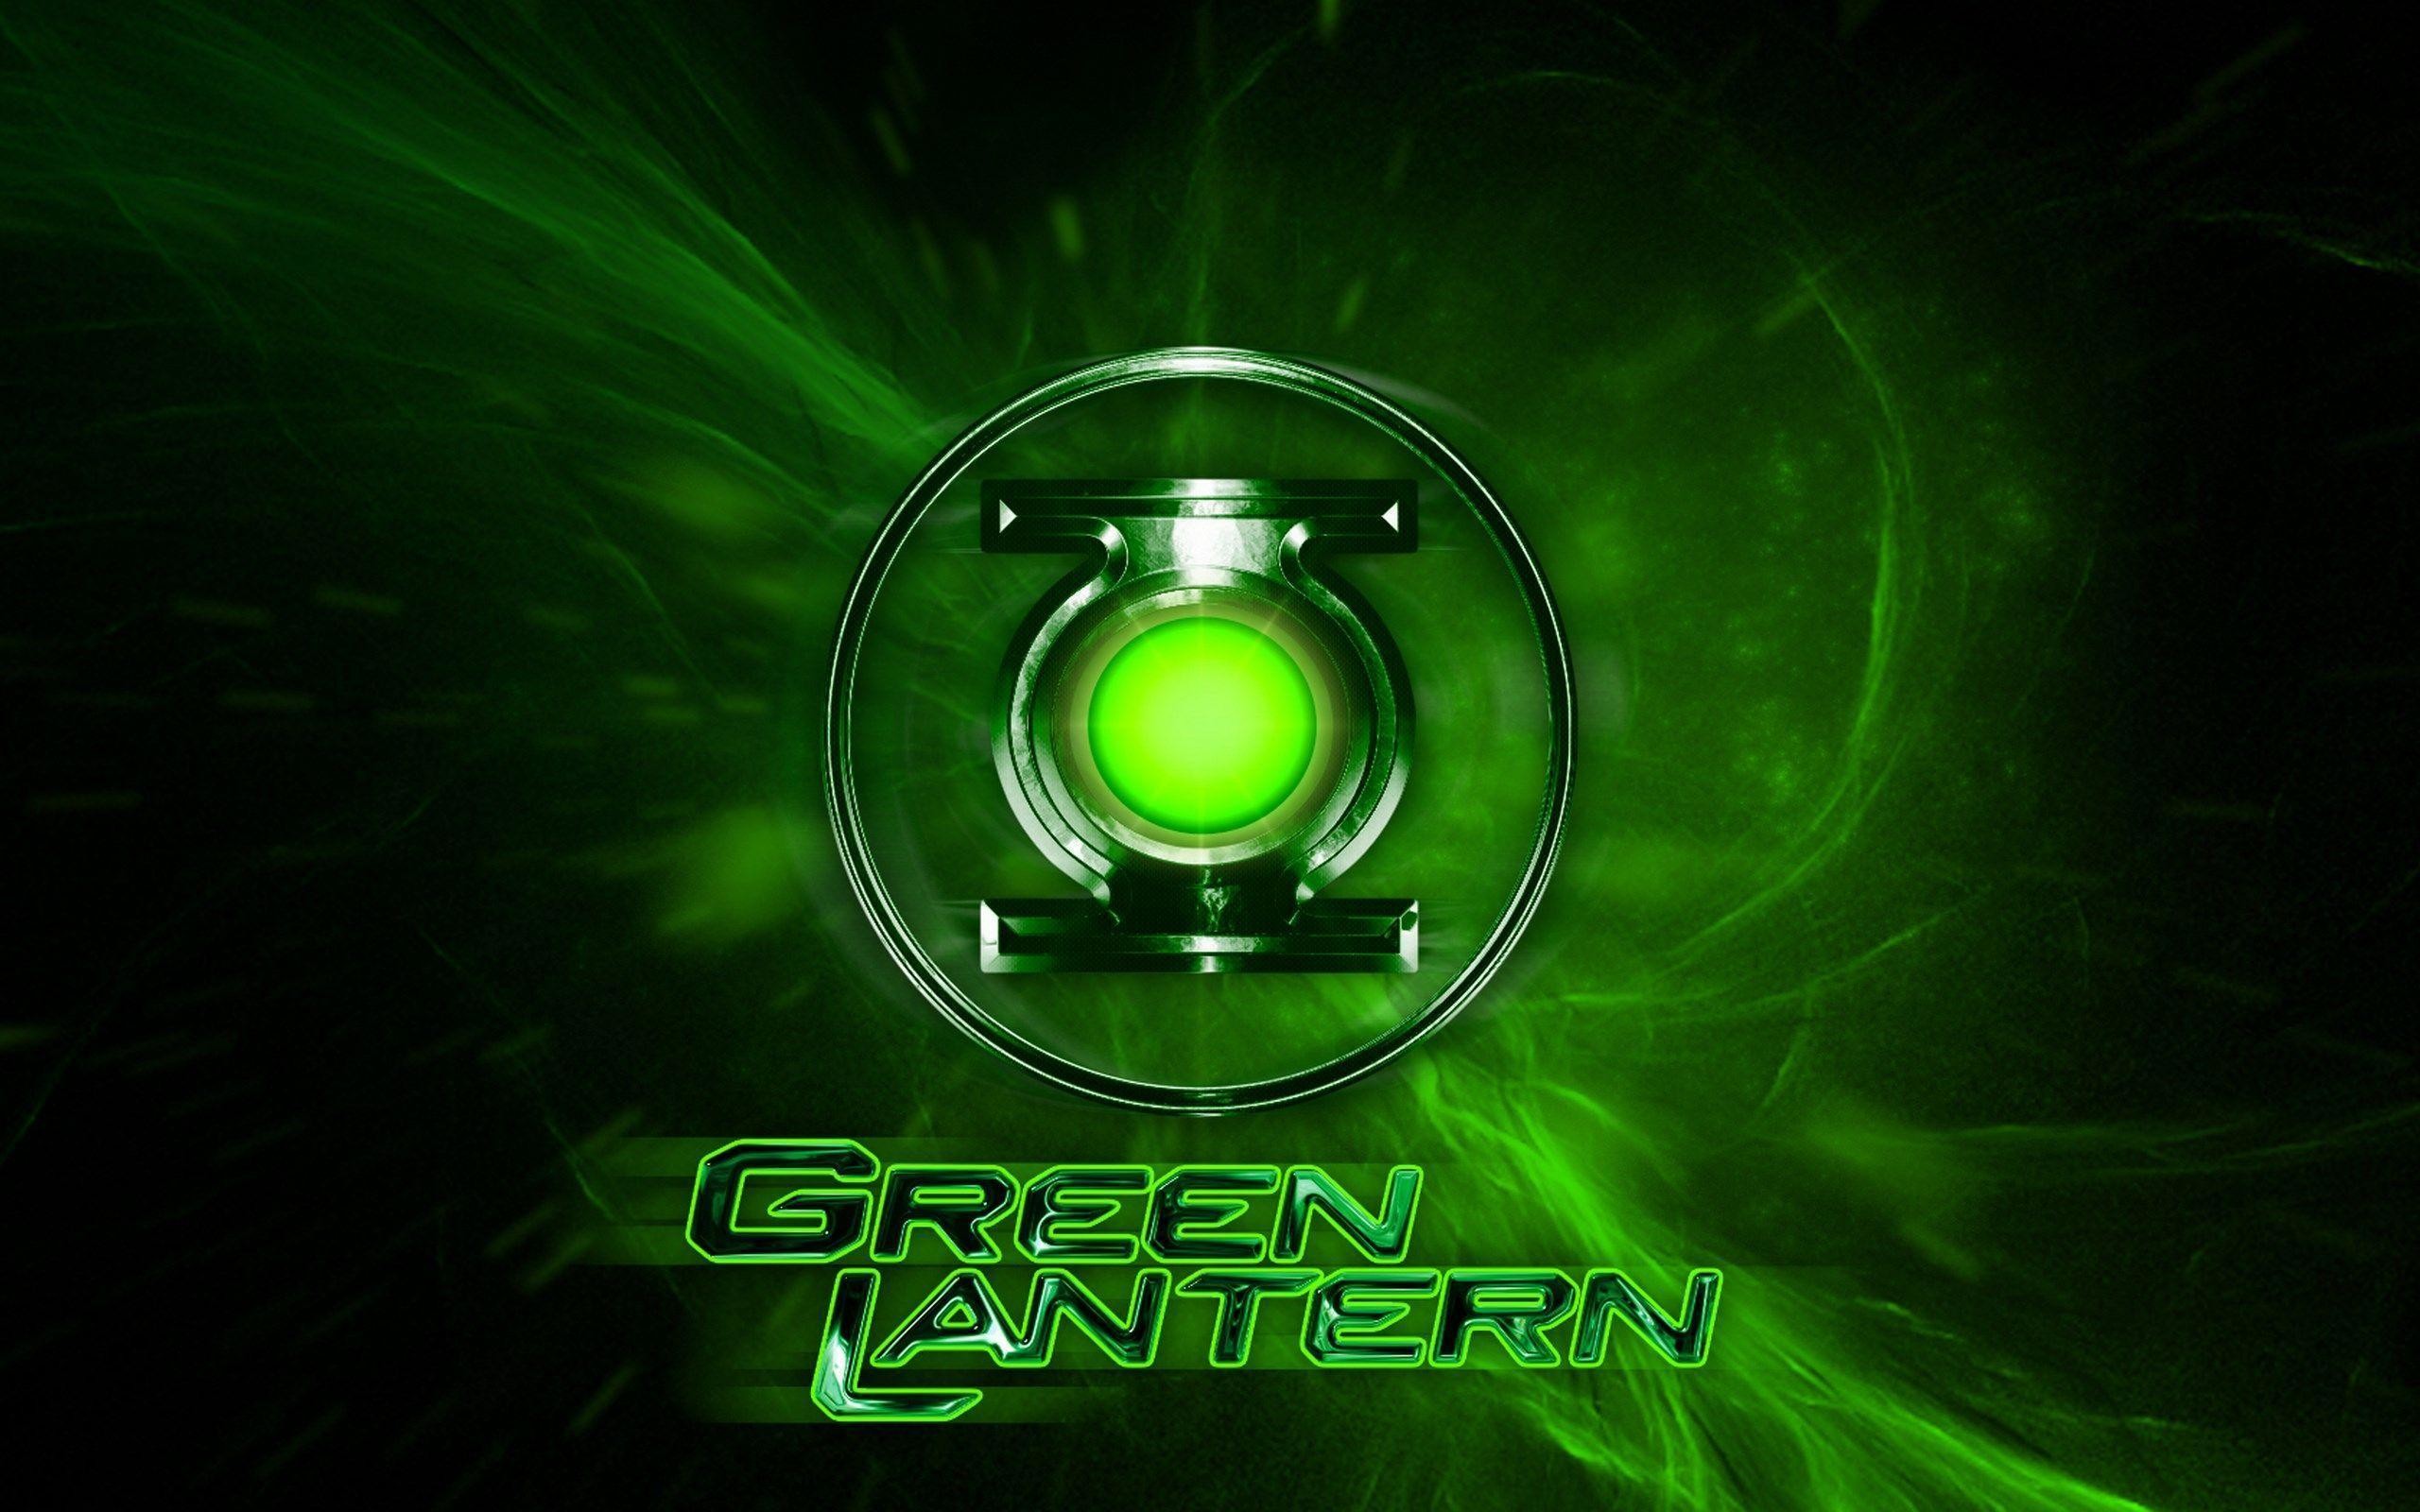 2560x1600 Green Lantern Wallpapers - Full HD wallpaper search